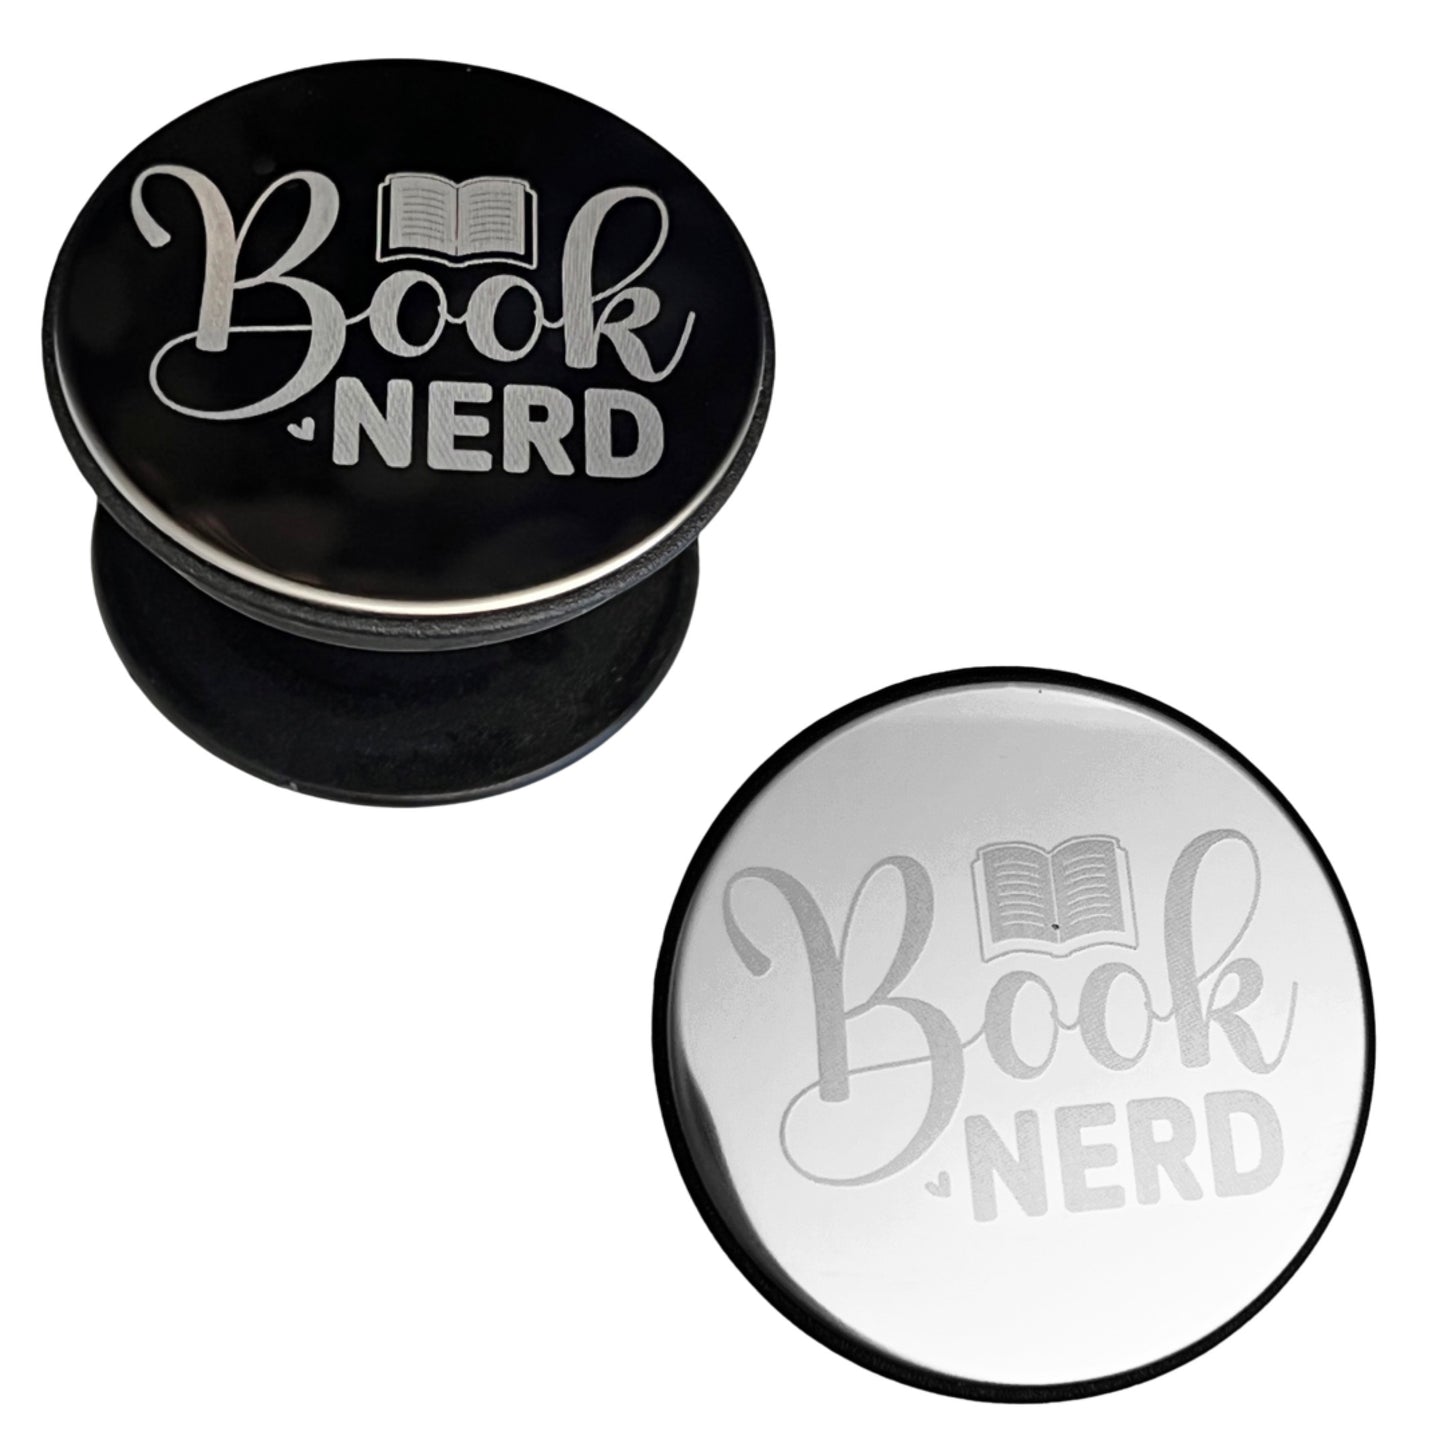 Book Nerd - Phone / Kindle Grip